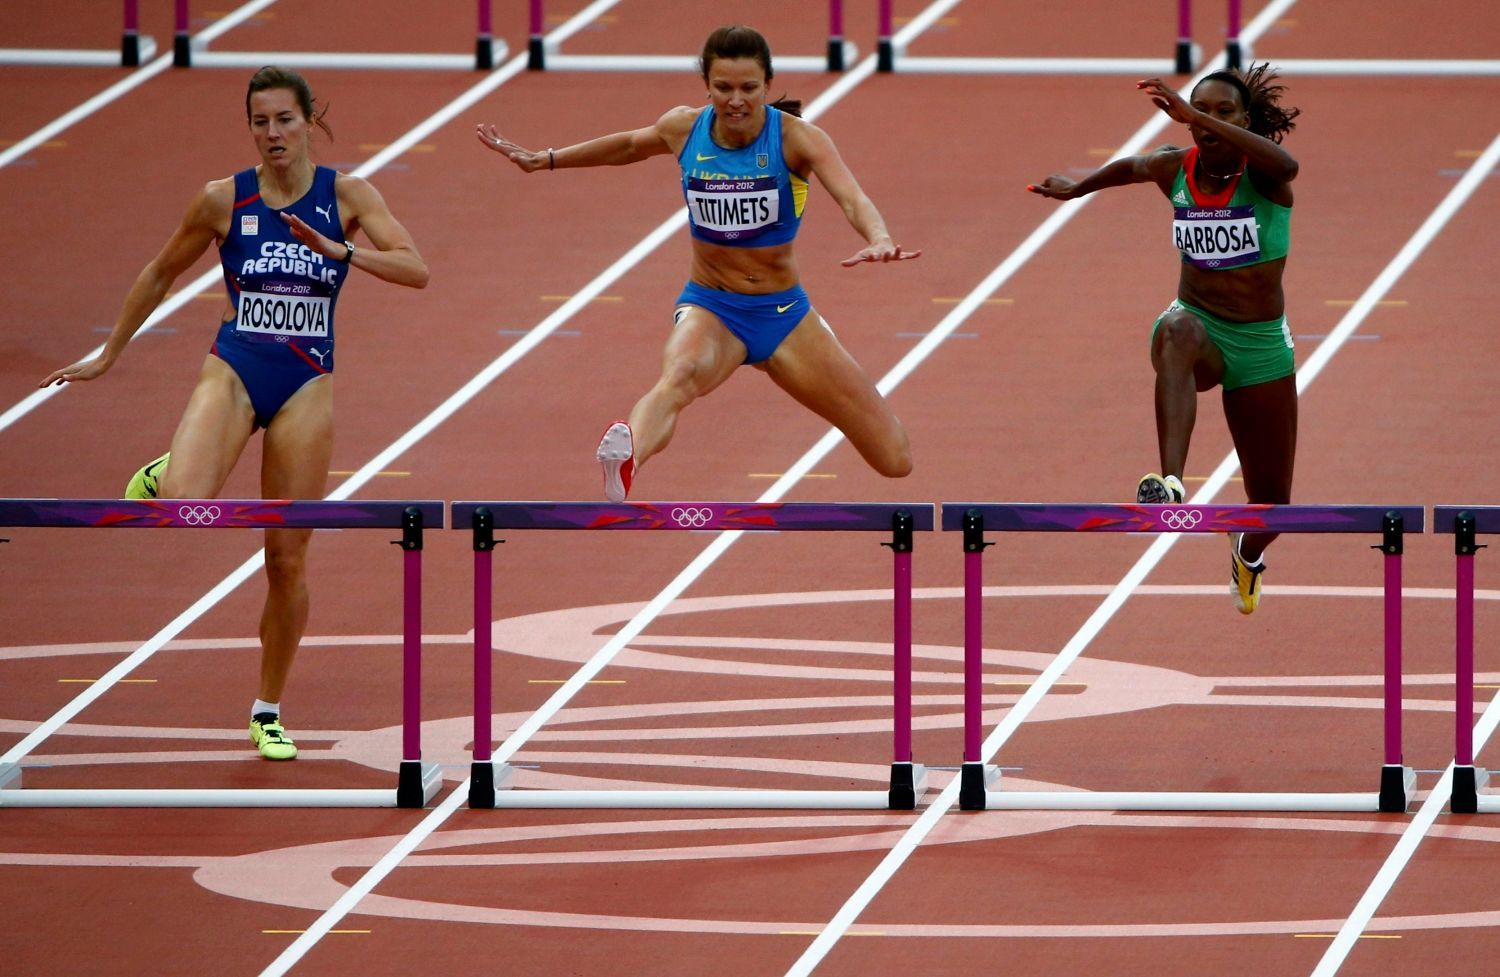 Конспект бег атлетика. Бег с барьерами на 400 м. Лондон 2012 бег с барьерами. Легкая атлетика 400 метров с барьерами. Техника бега на 400 м с барьерами.